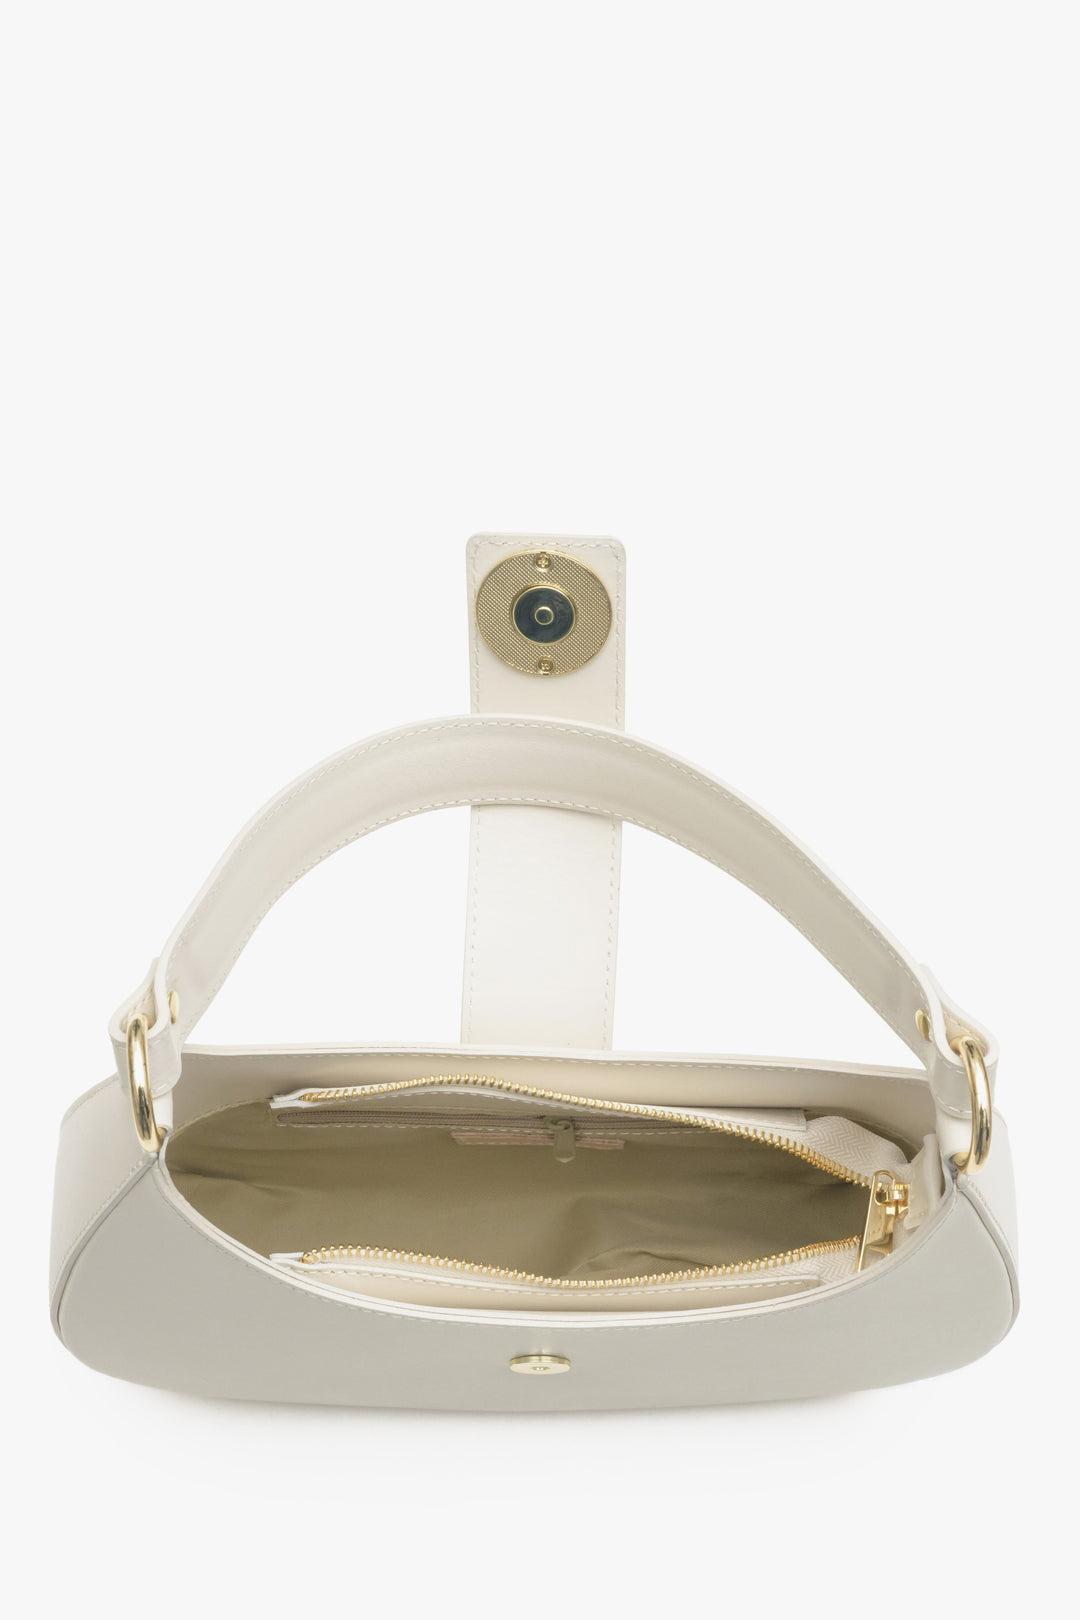 Estro women's milky-beige baguette-style handbag made of Italian genuine leather.